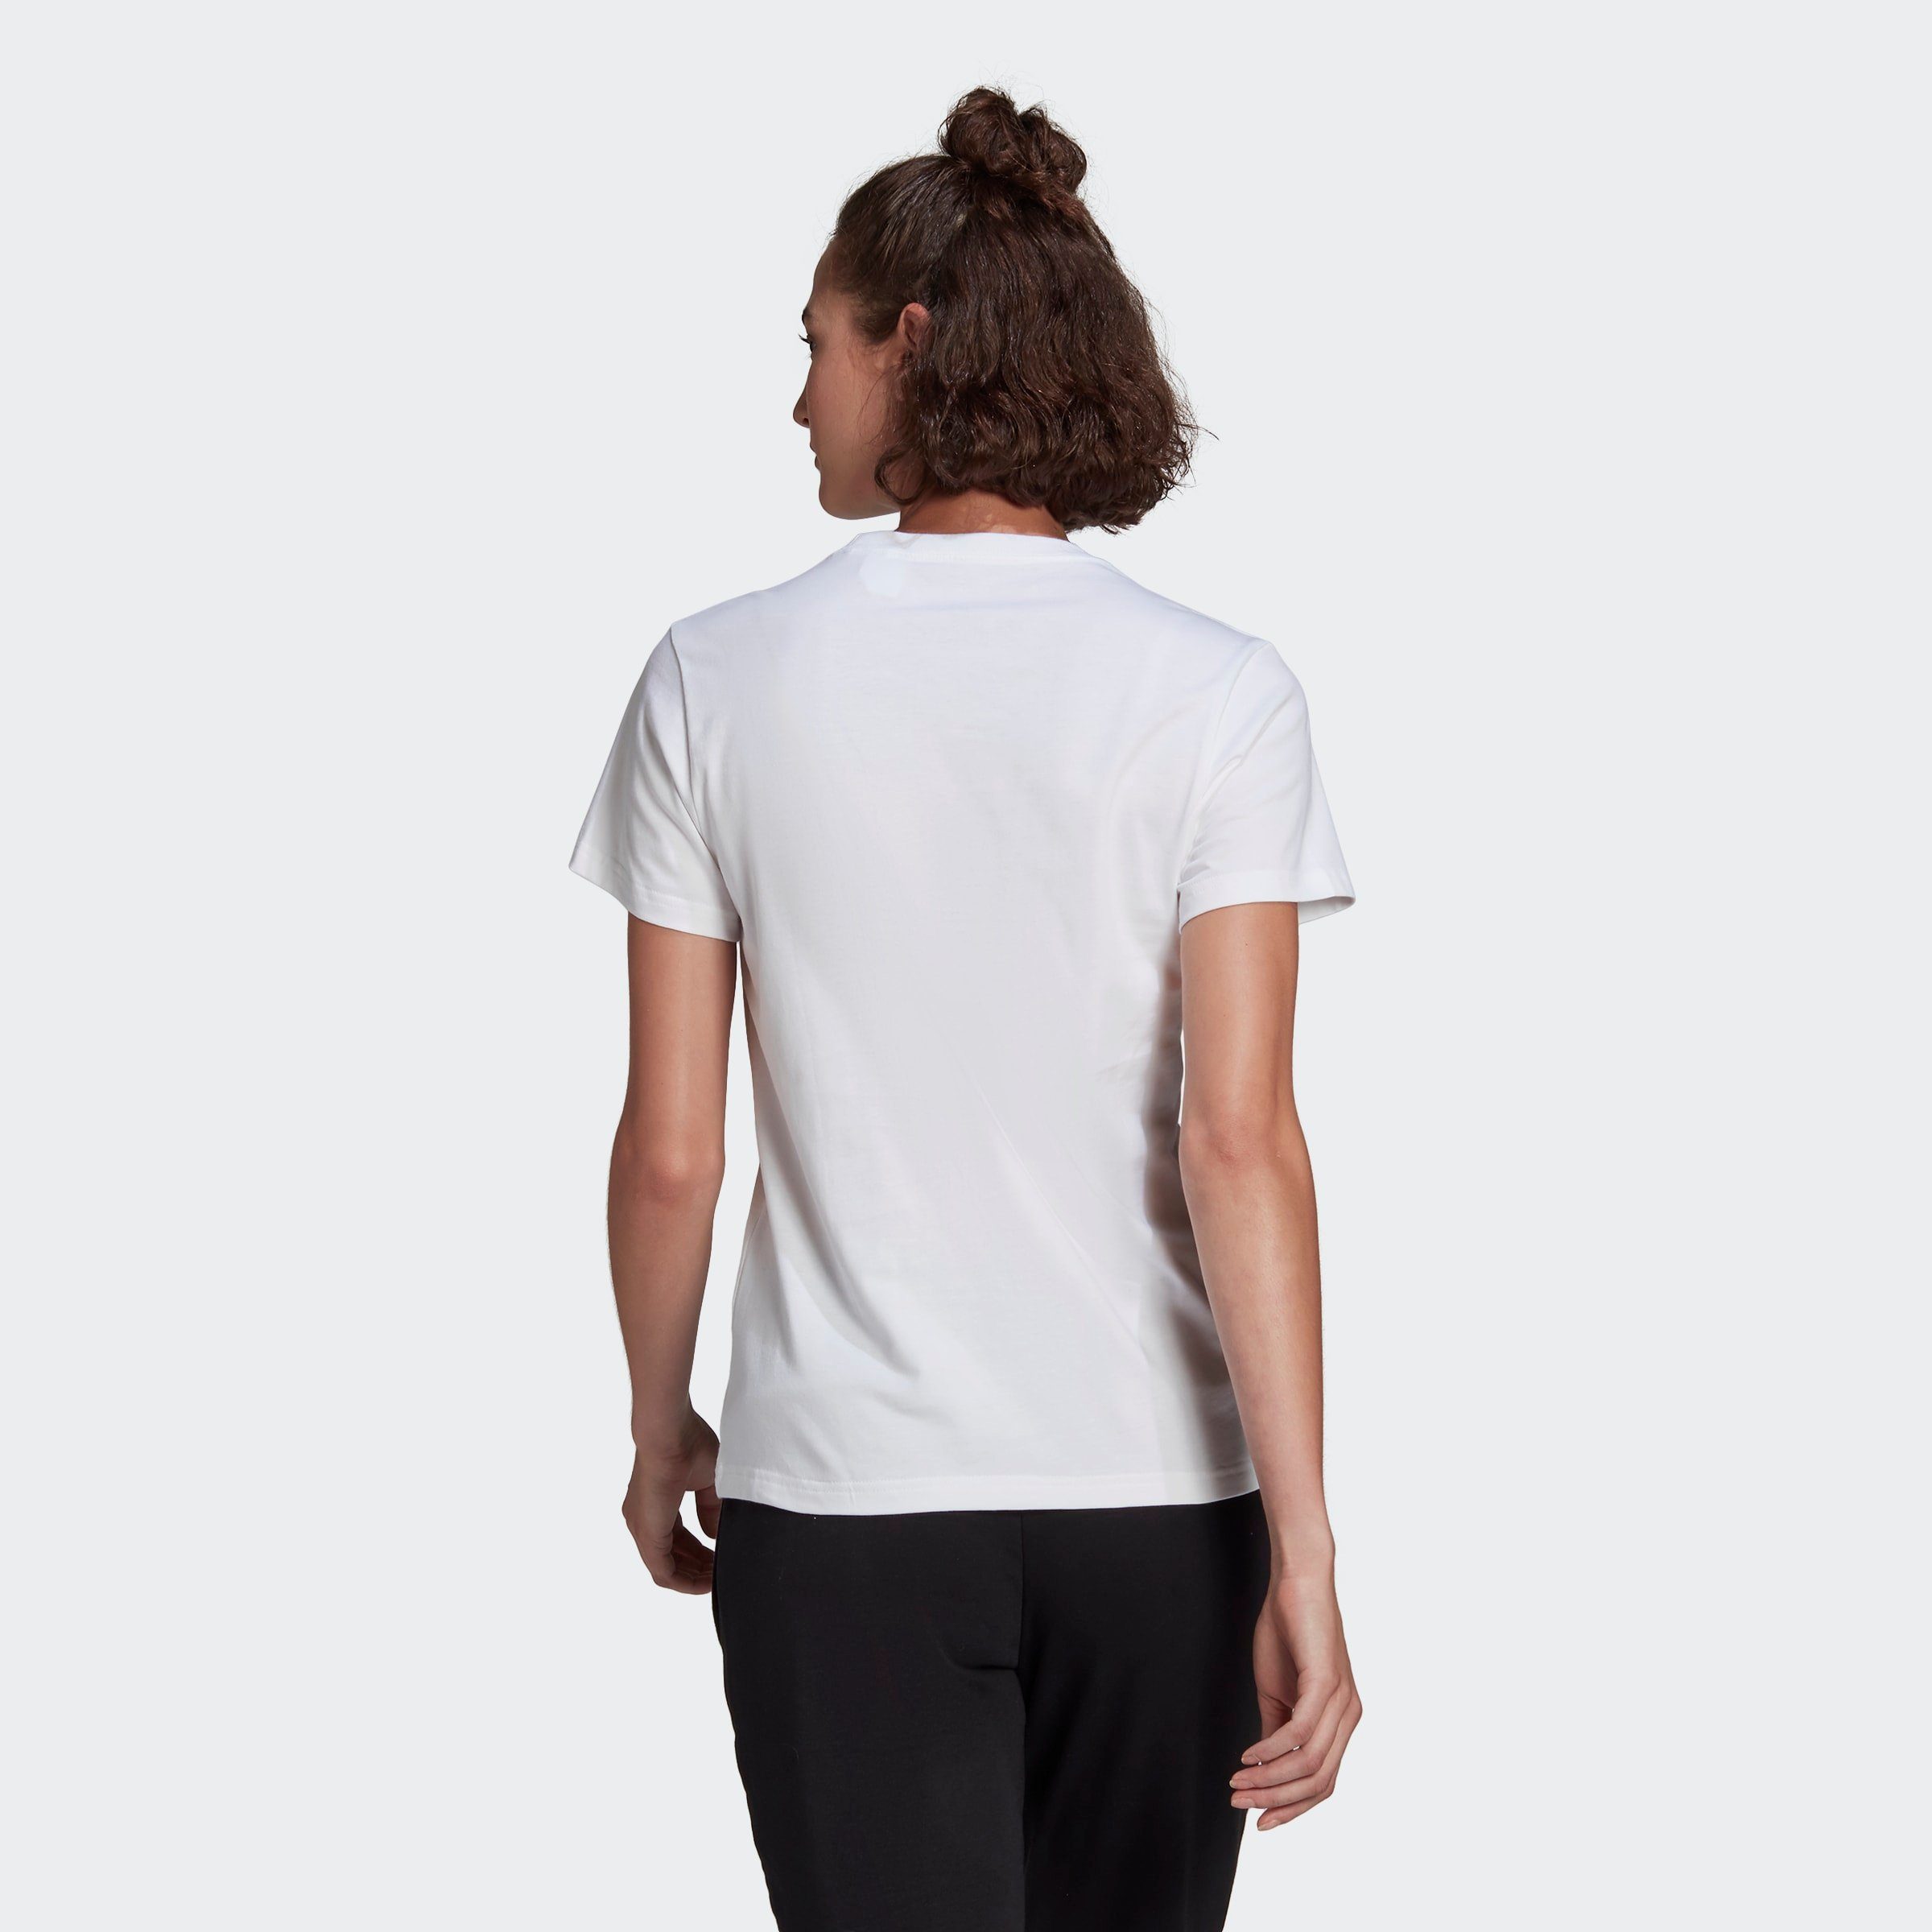 LOGO T-Shirt LOUNGEWEAR White Sportswear Black ESSENTIALS / adidas